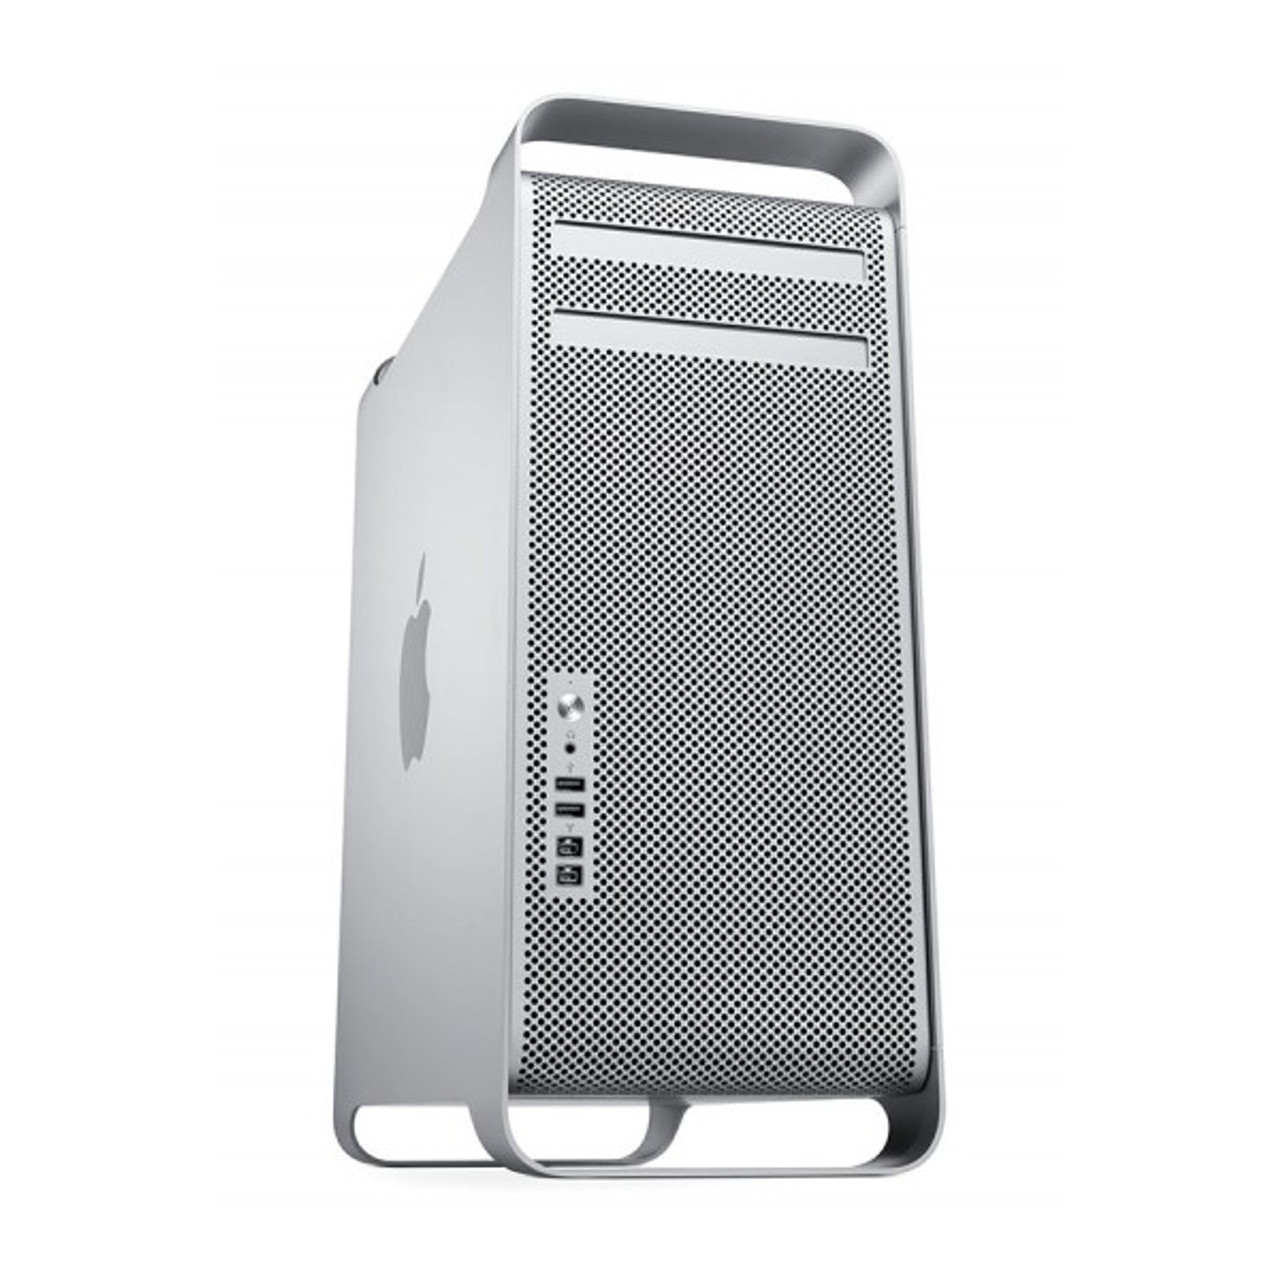 Apple Mac Pro 2x 2.4GHz Quad-Core (8 Cores) Xeon (Mid 2010) MC561LL/A -  Good Condition